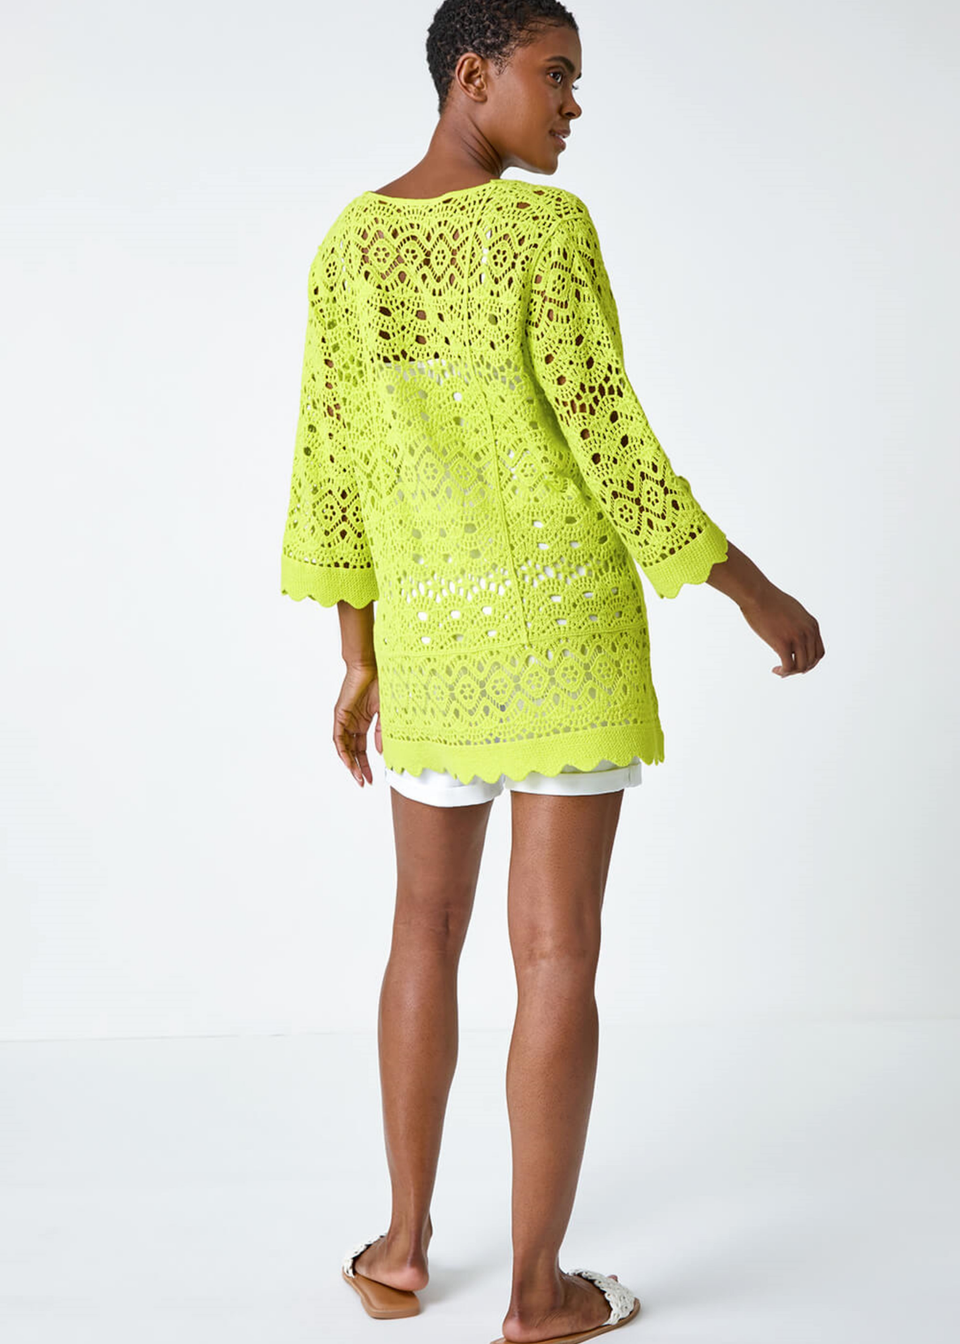 Roman Lime Cotton Crochet Tunic Top